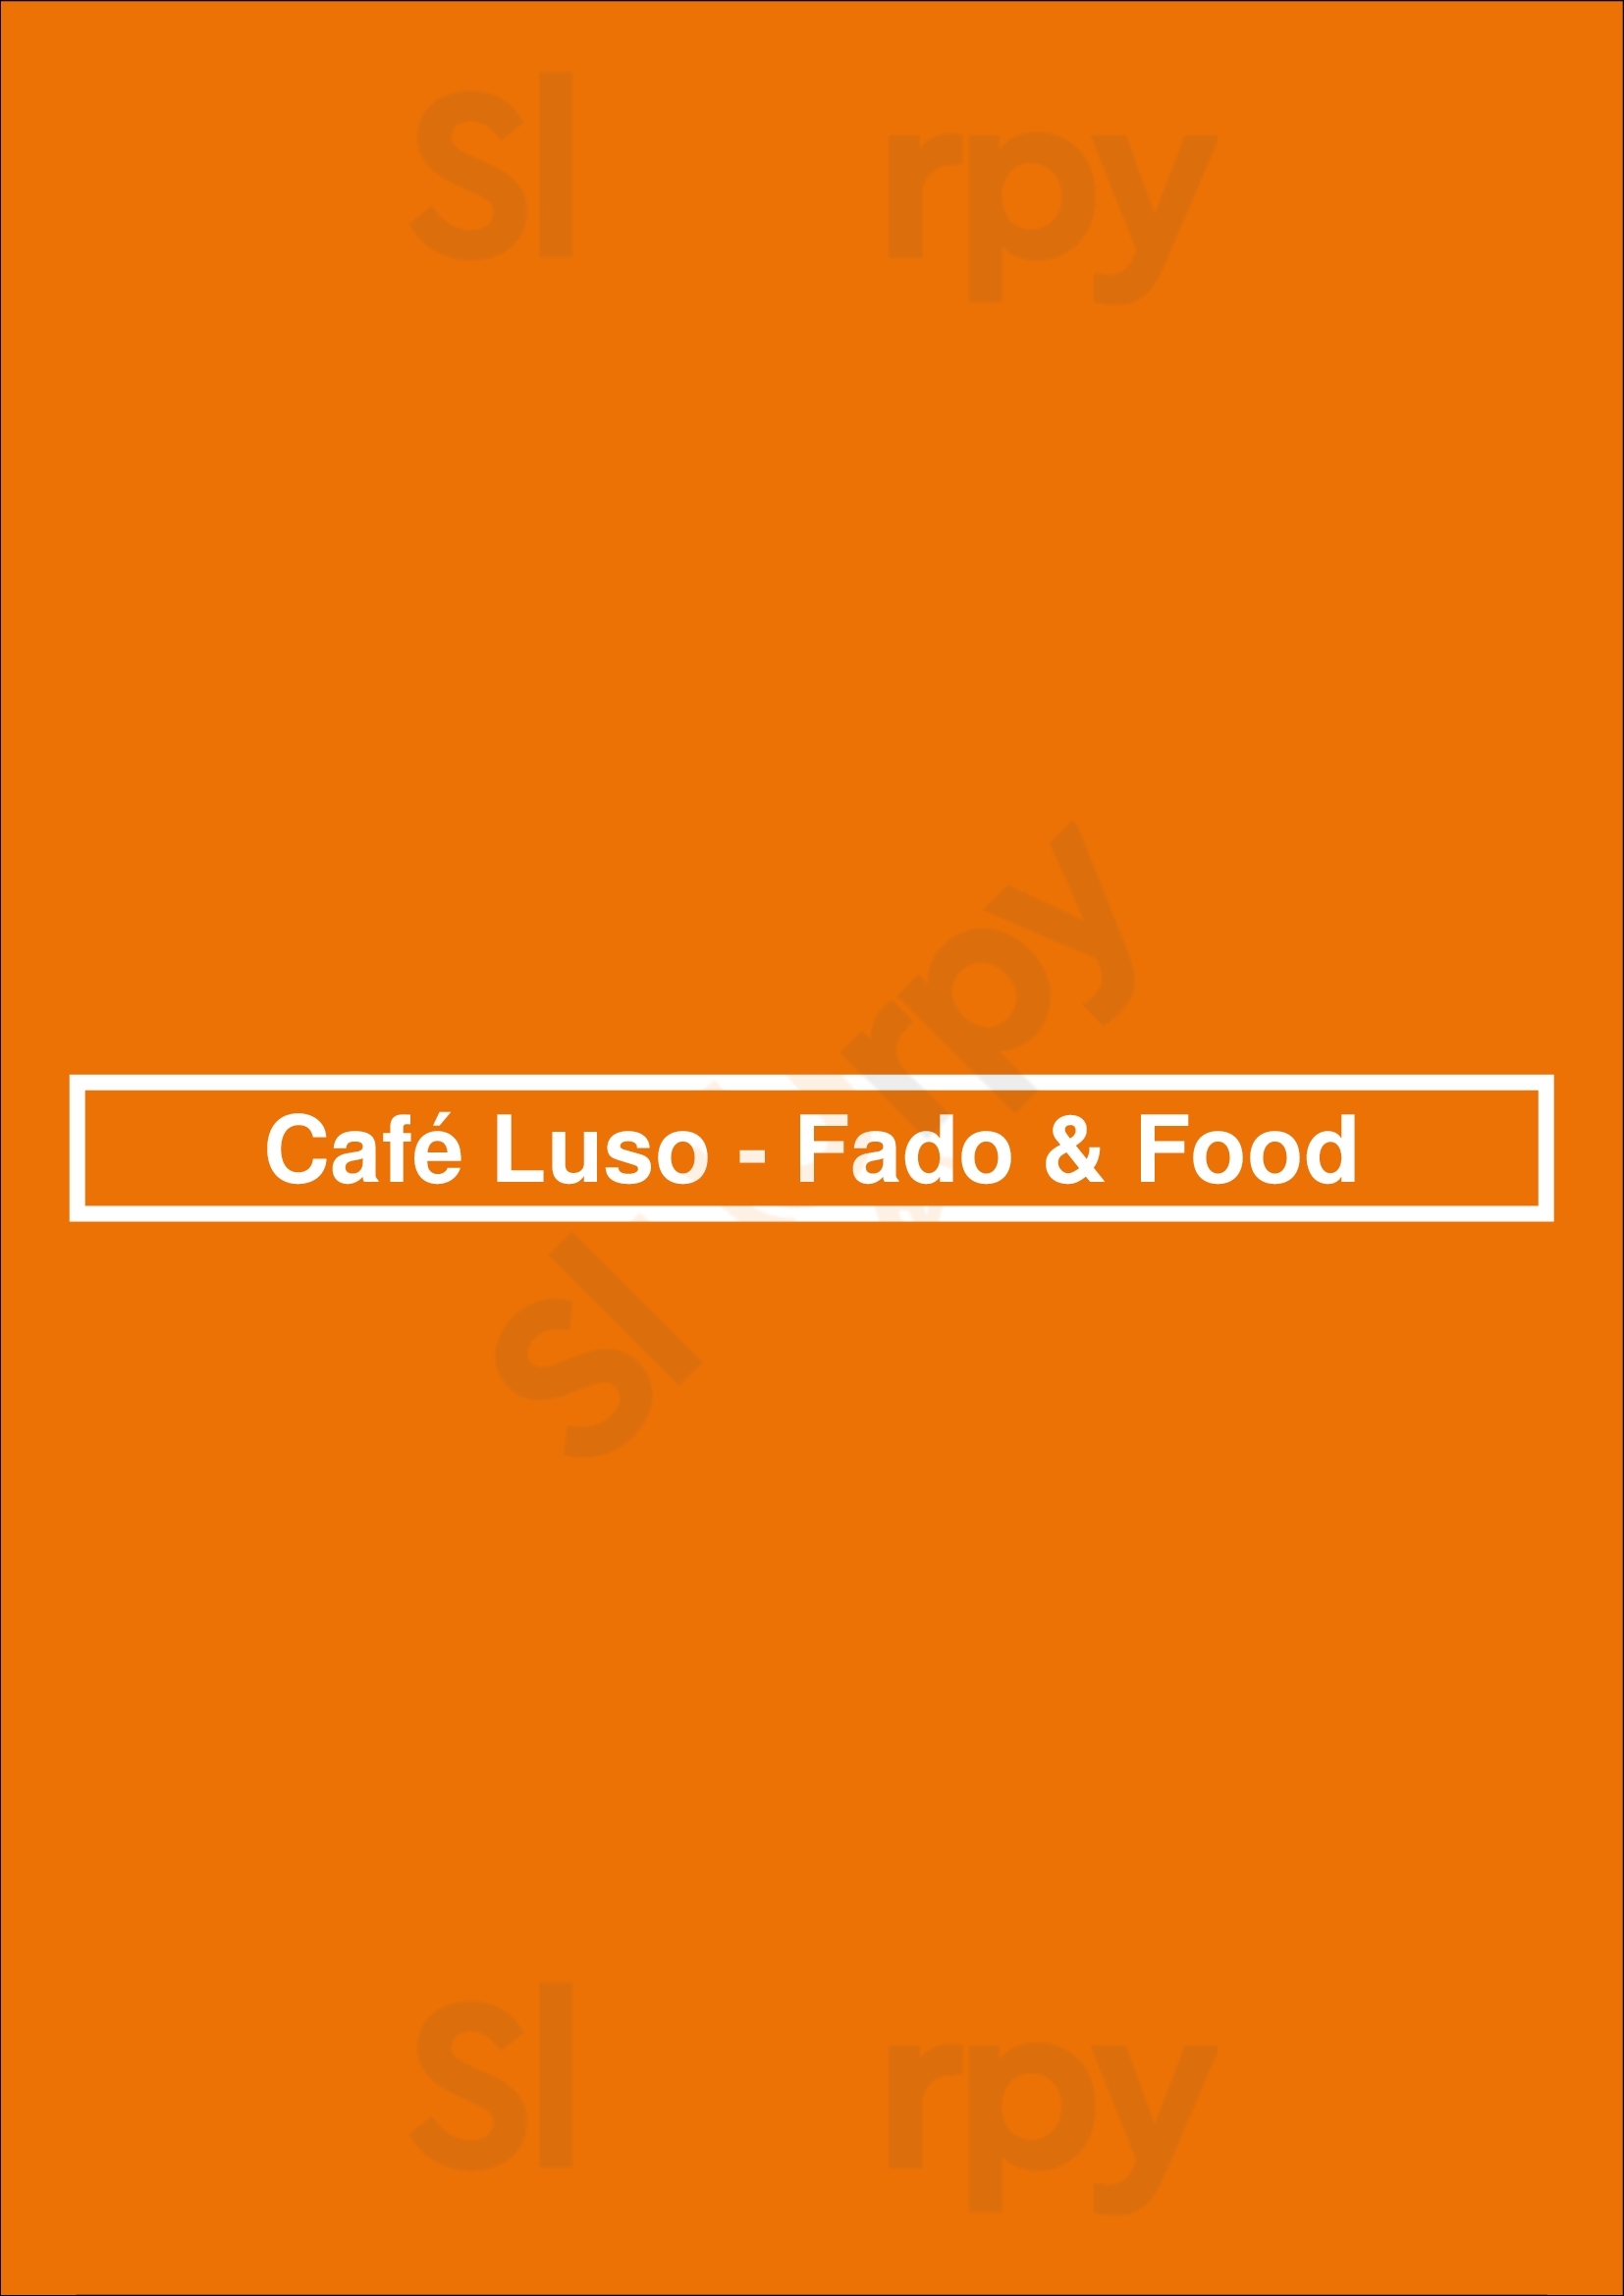 Café Luso - Fado & Food Lisboa Menu - 1